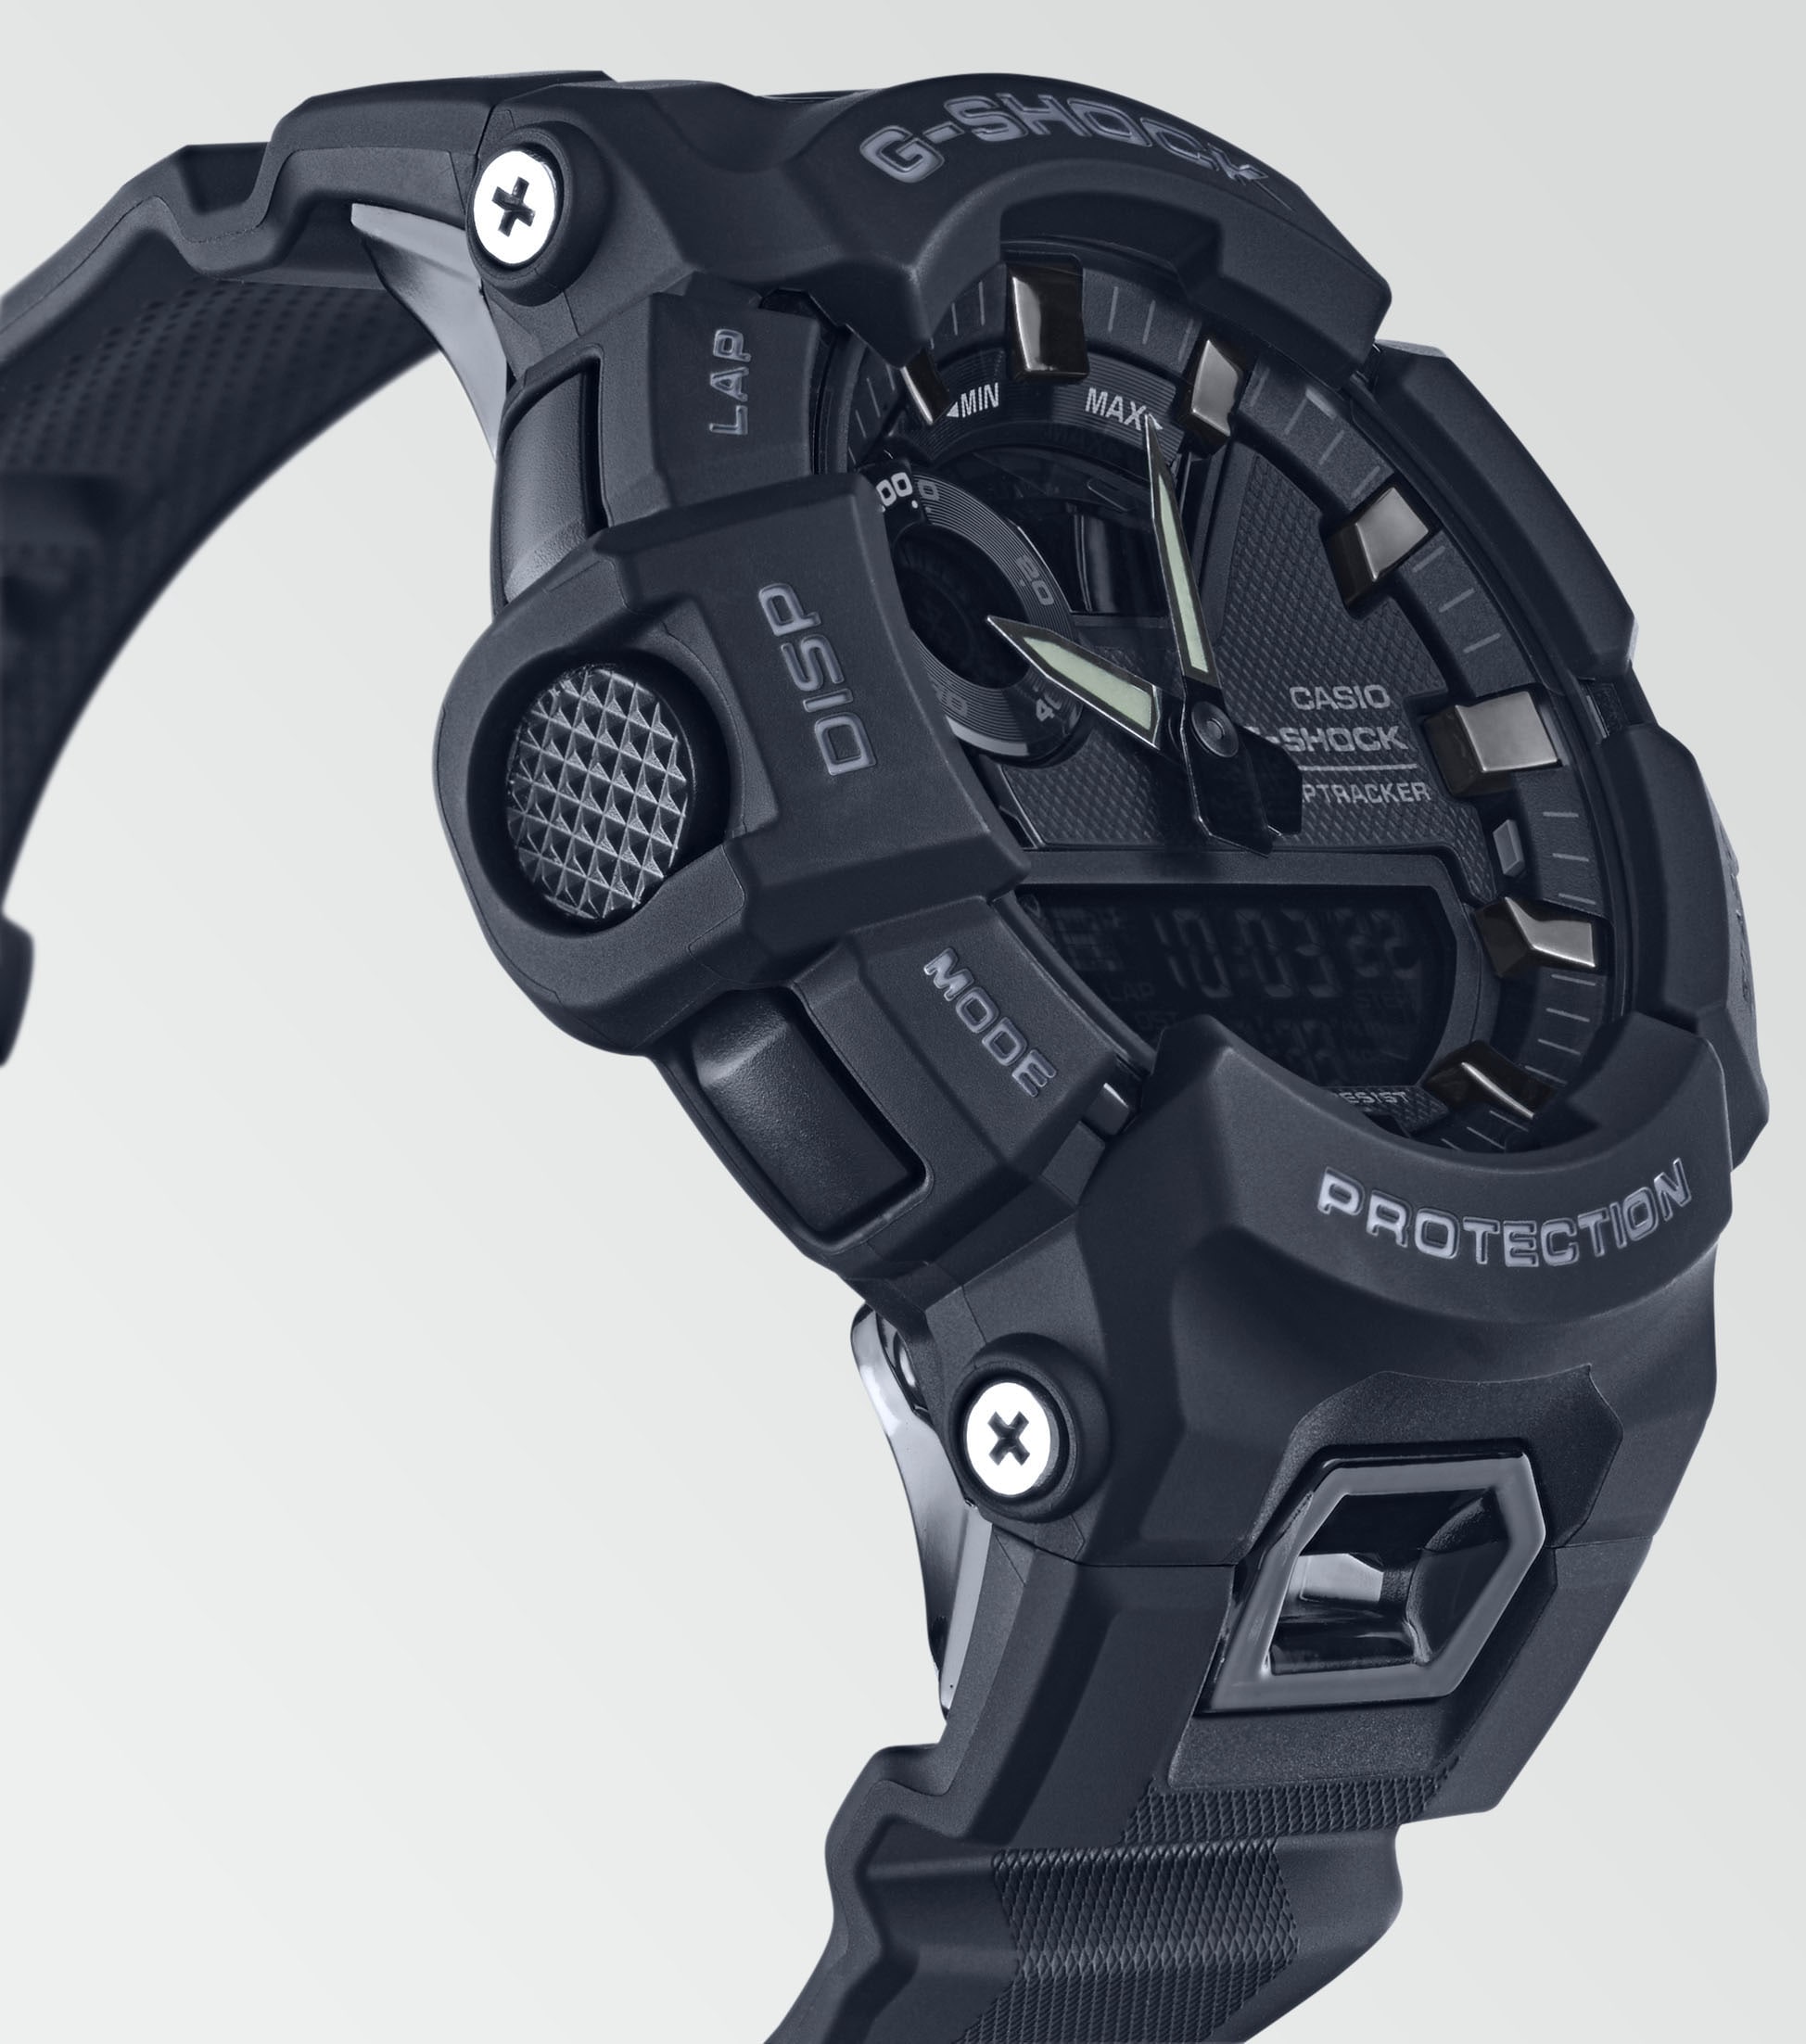 CASIO G-SHOCK Smartwatch »GBA-900-1AER«